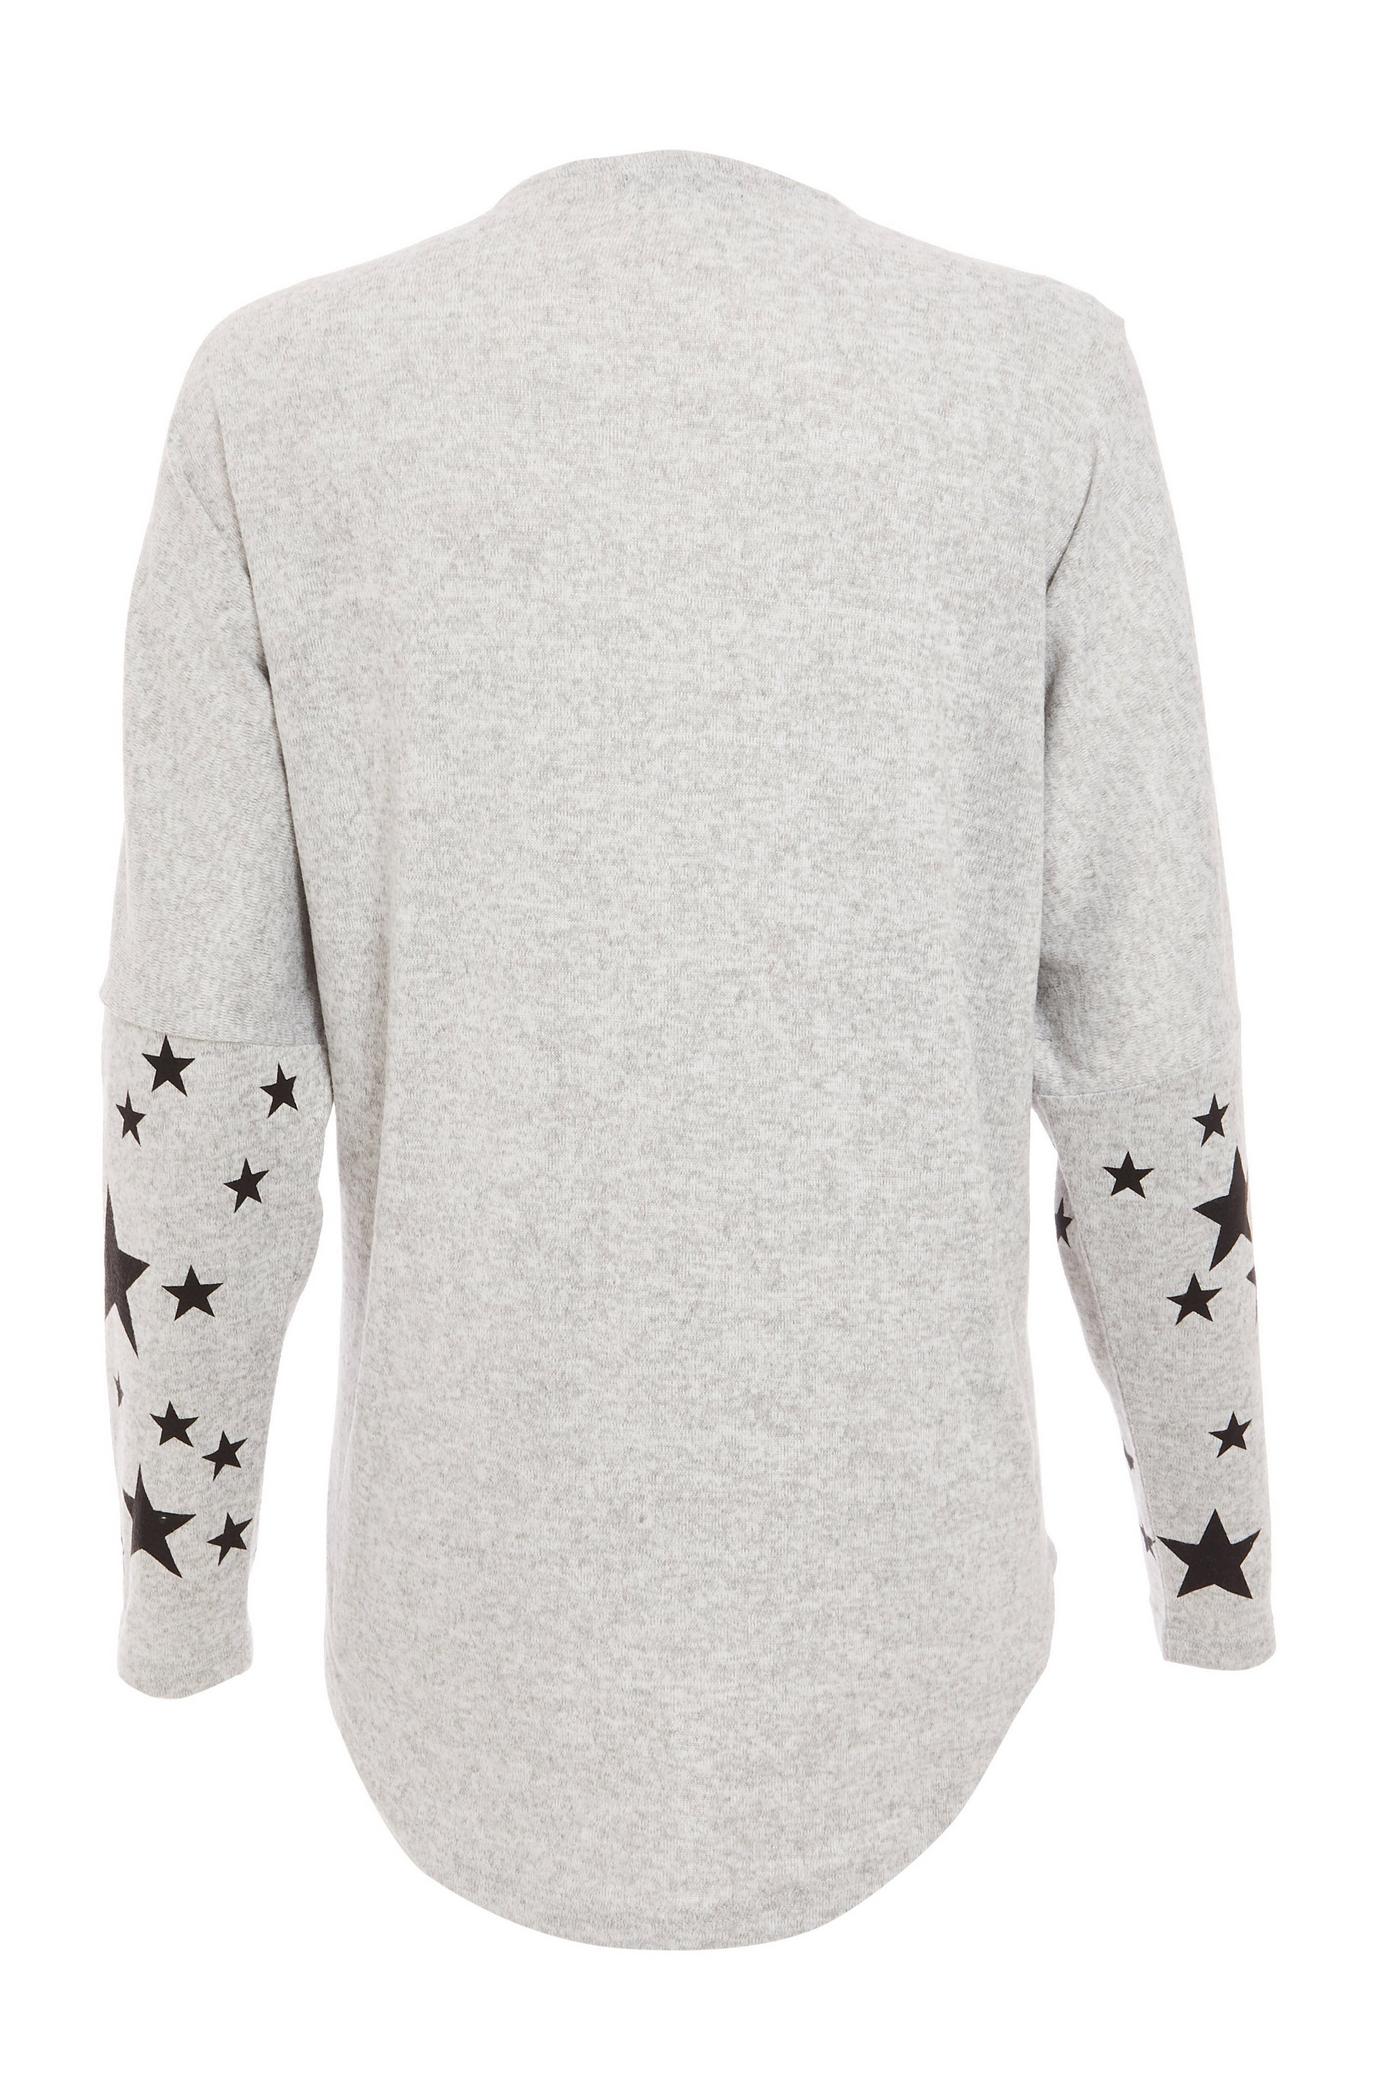 Grey Knit Star Print Zip Front Top